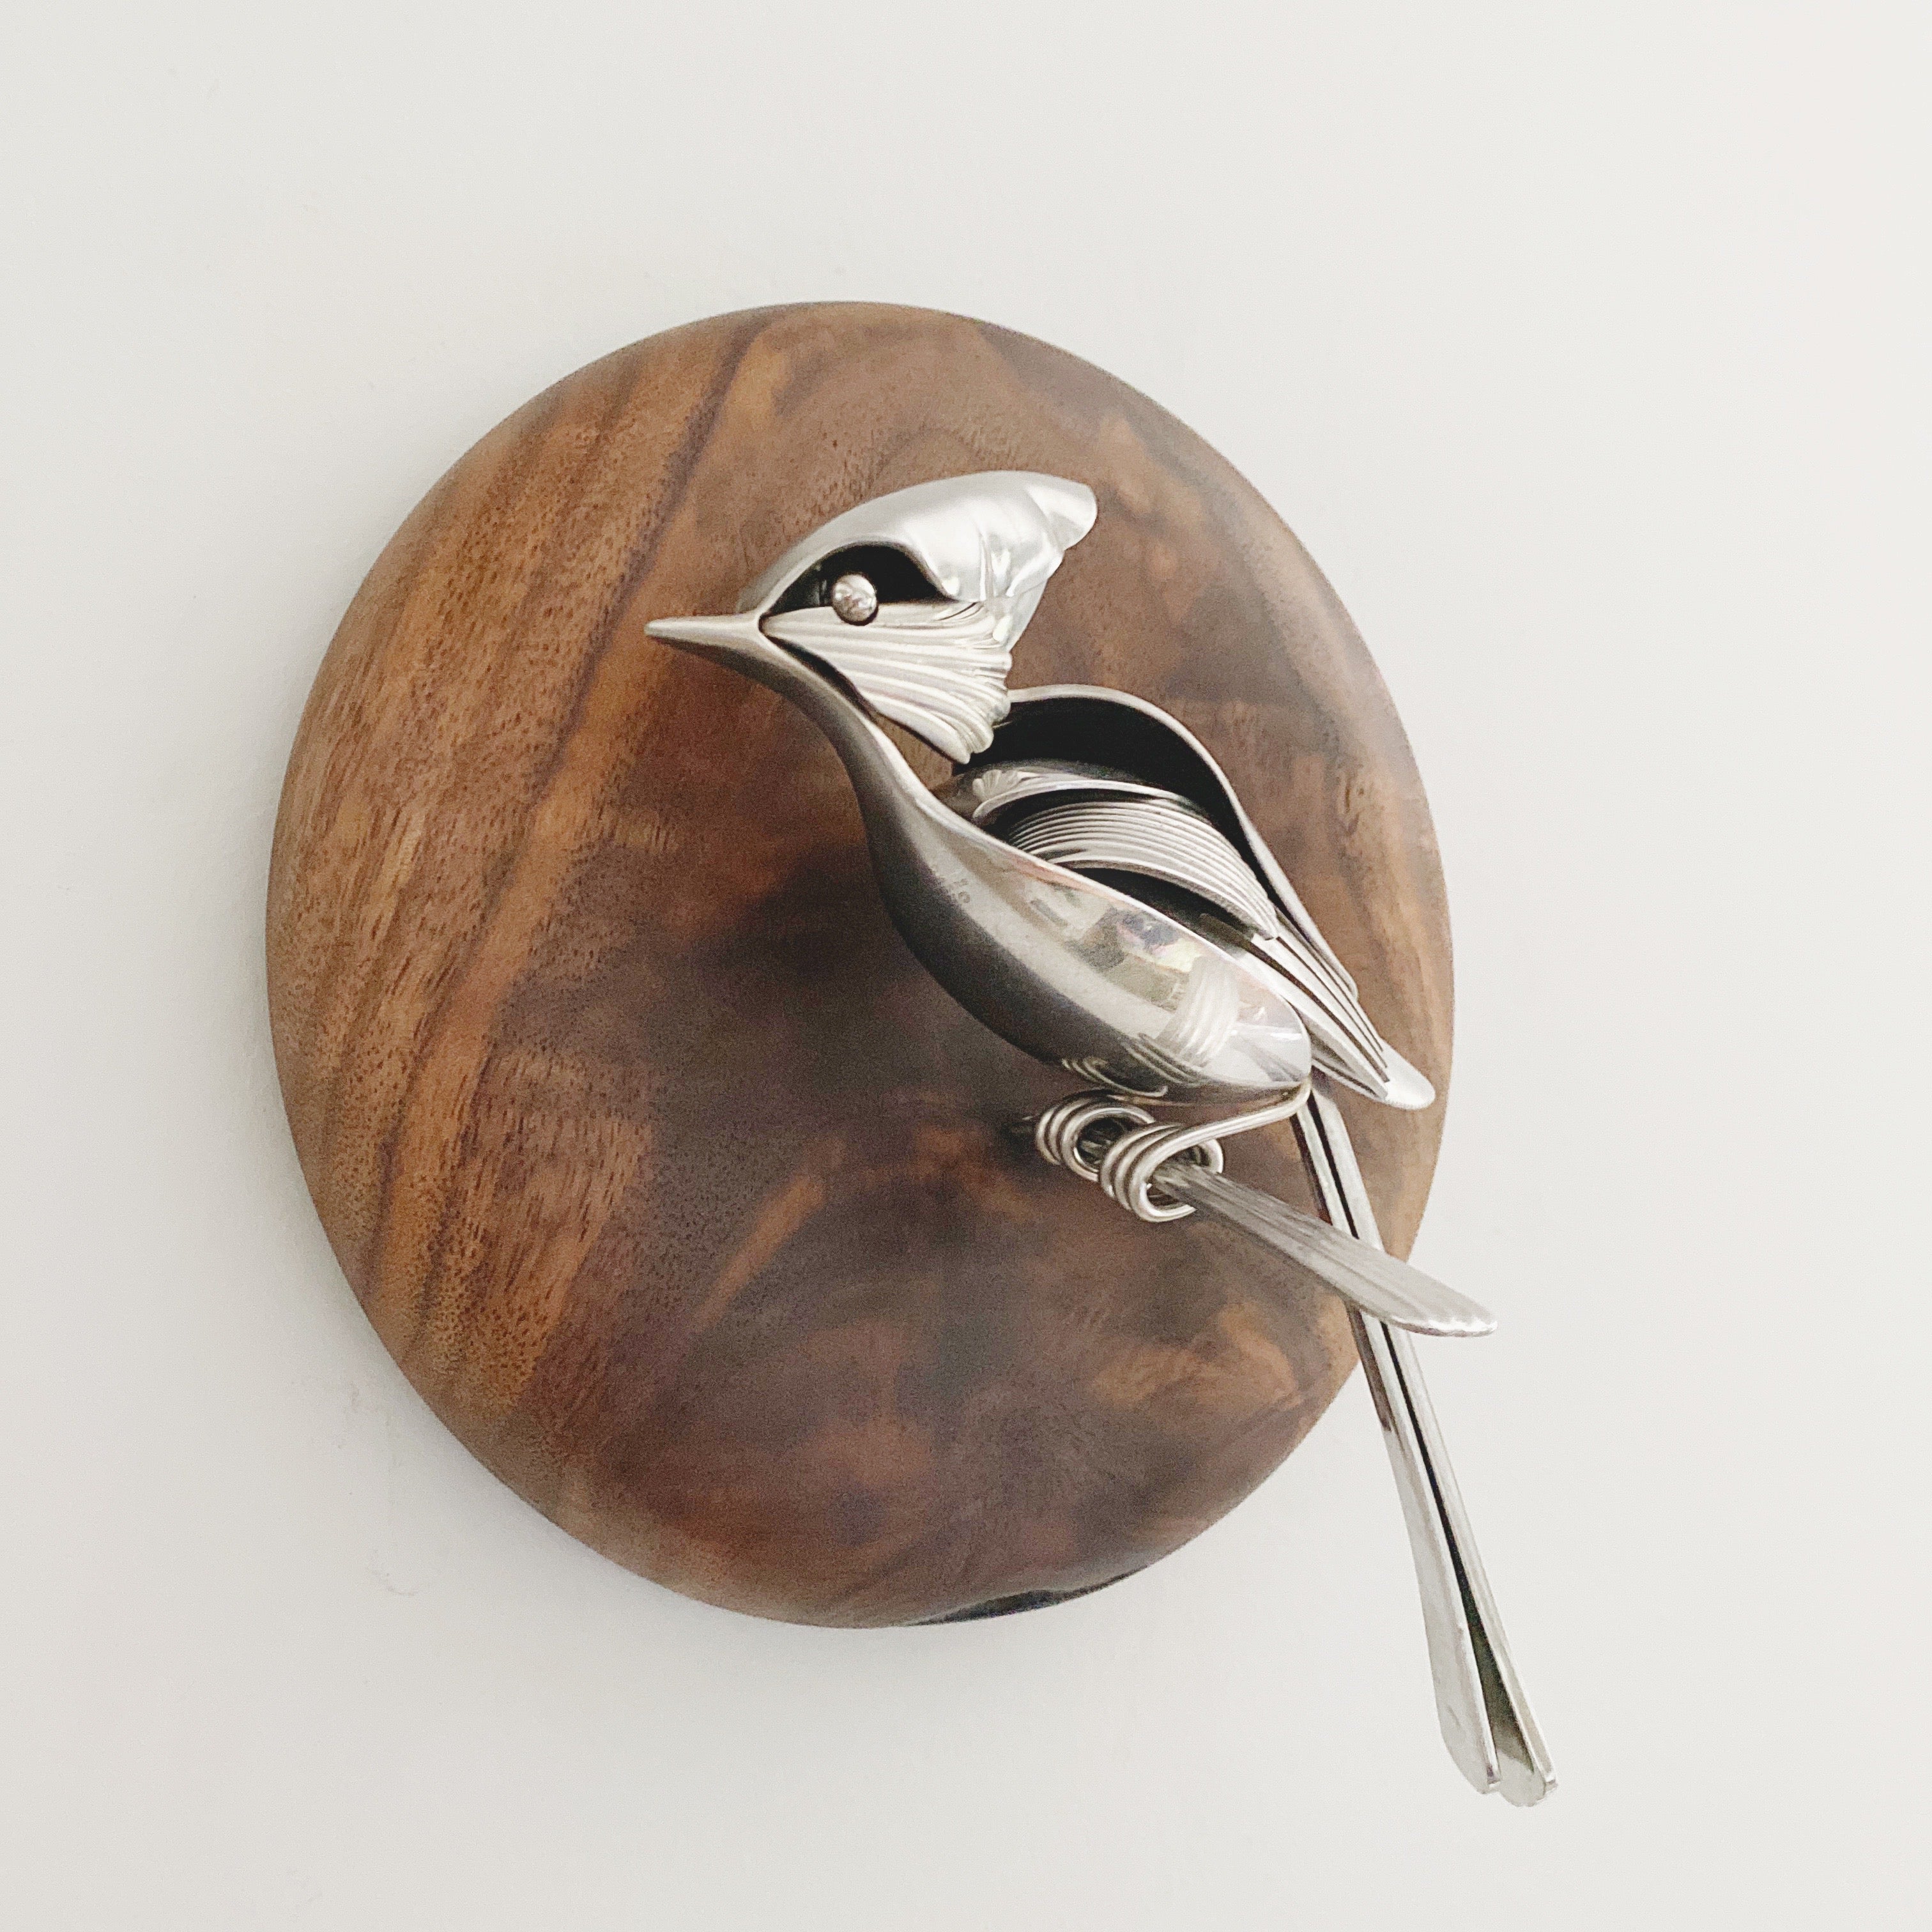 "Credence" - Upcycled Metal Bird Sculpture